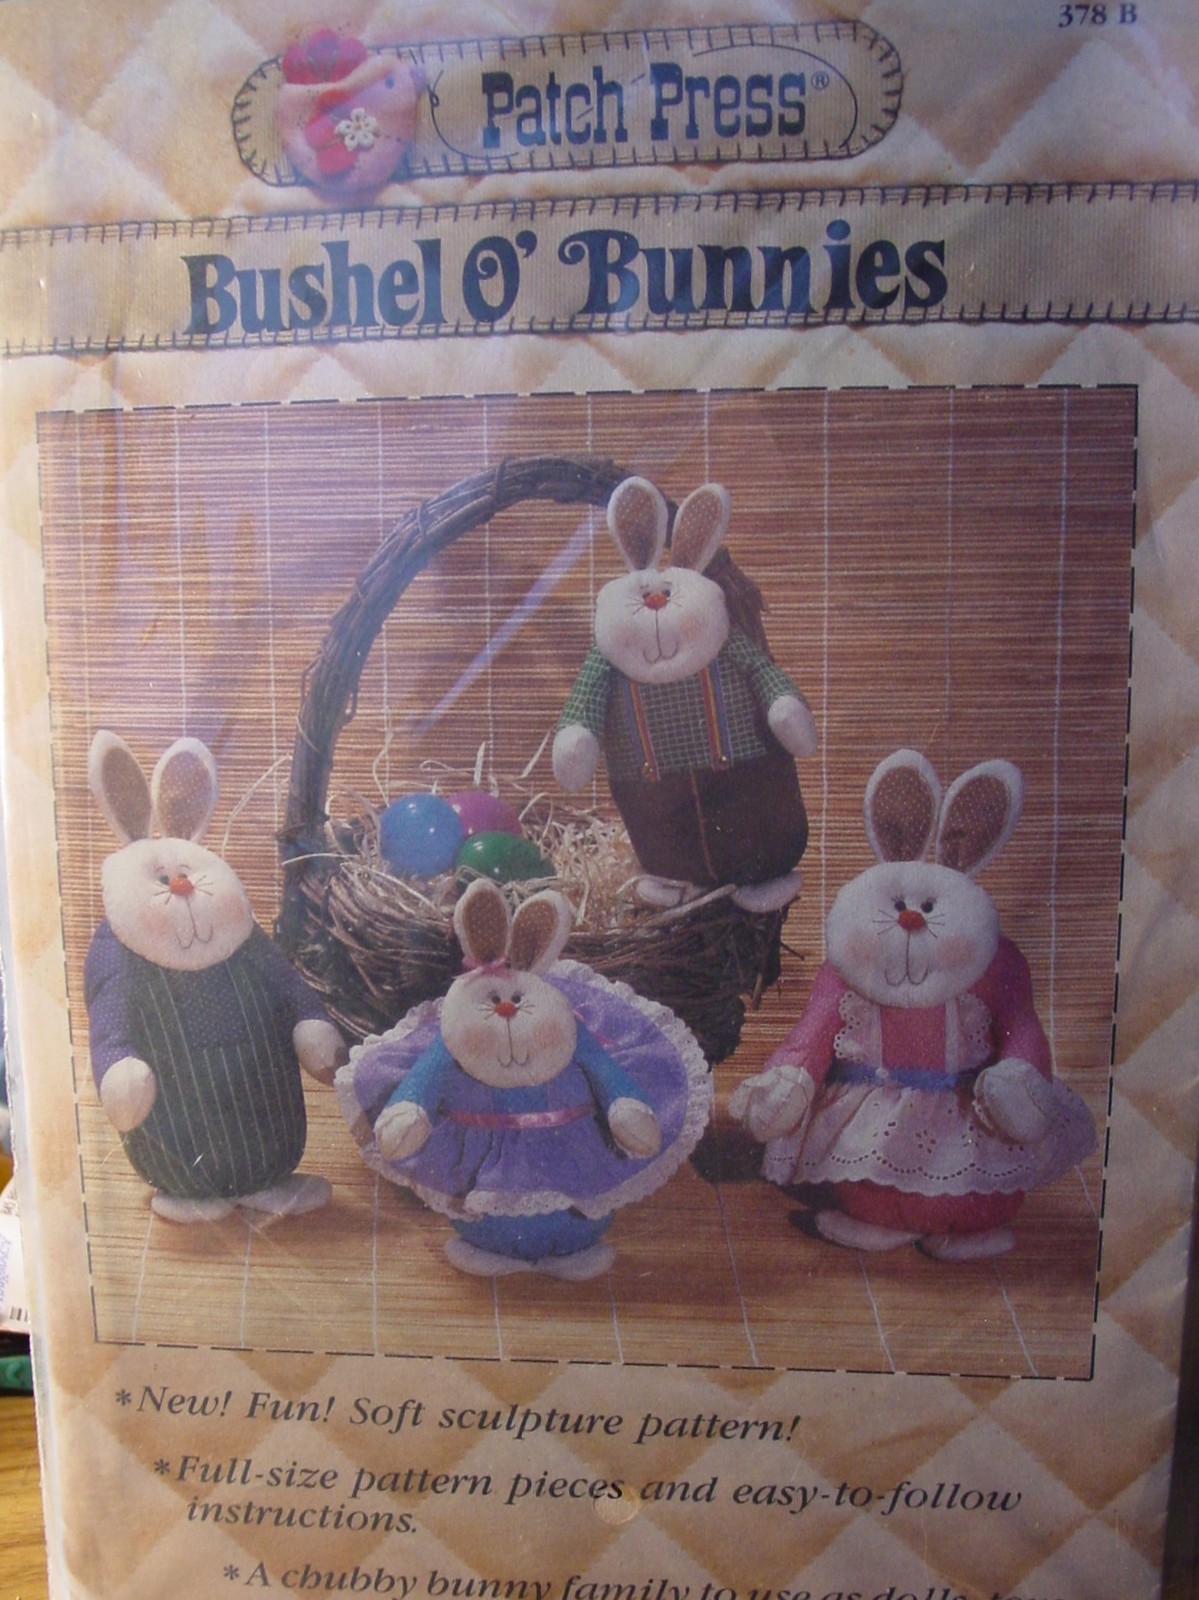 Sewing Pattern Bushel o' Bunnies toys Uncut - $5.00